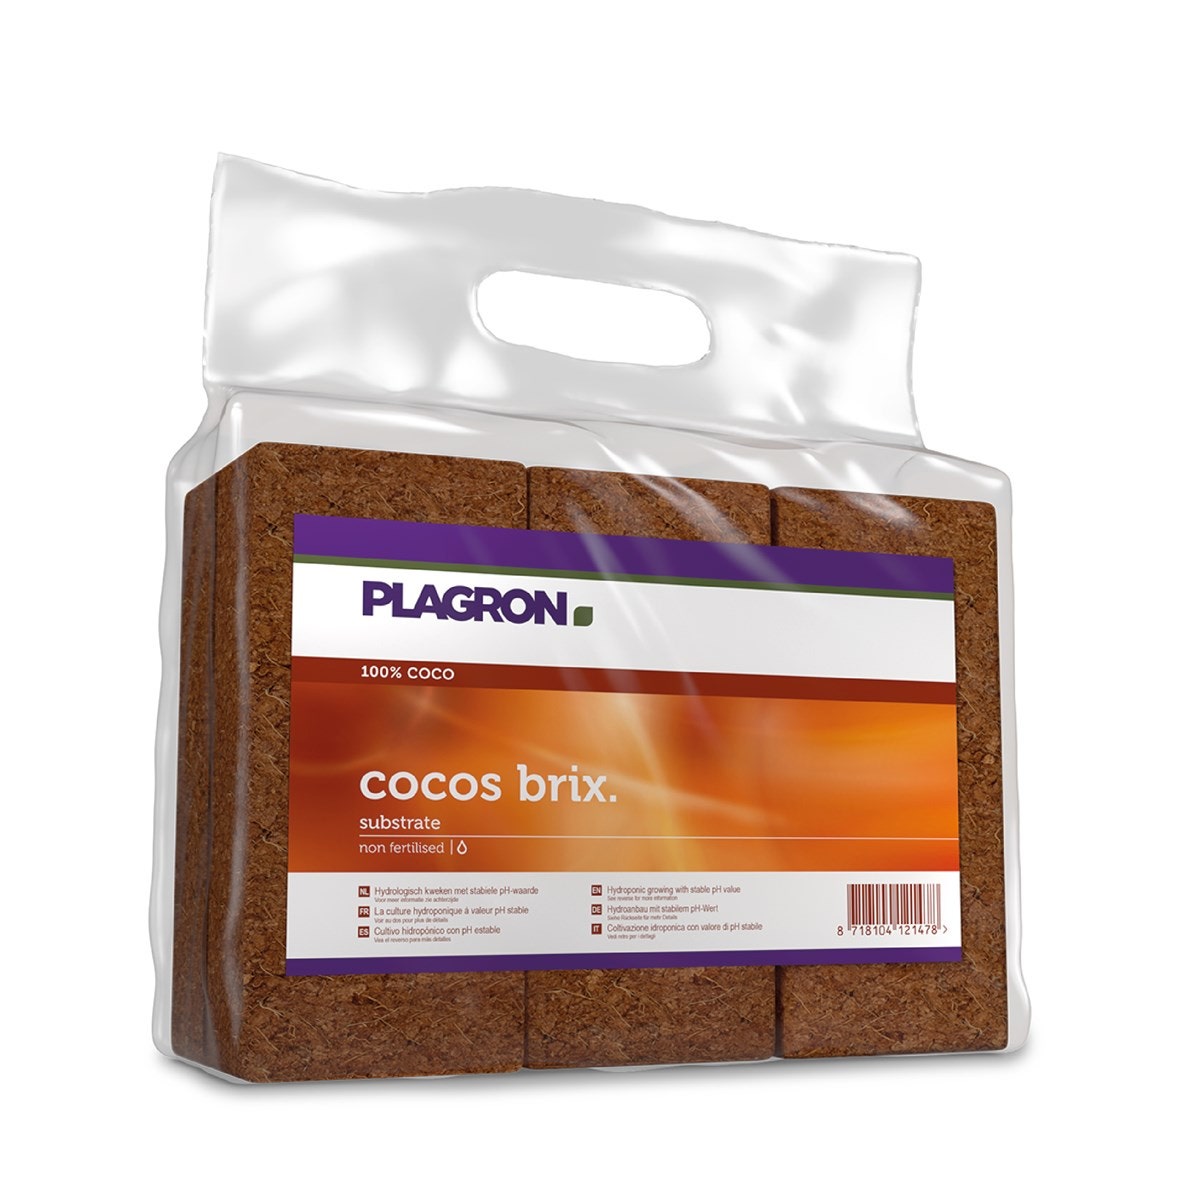 Plagron Cocos Brix (6 pack)